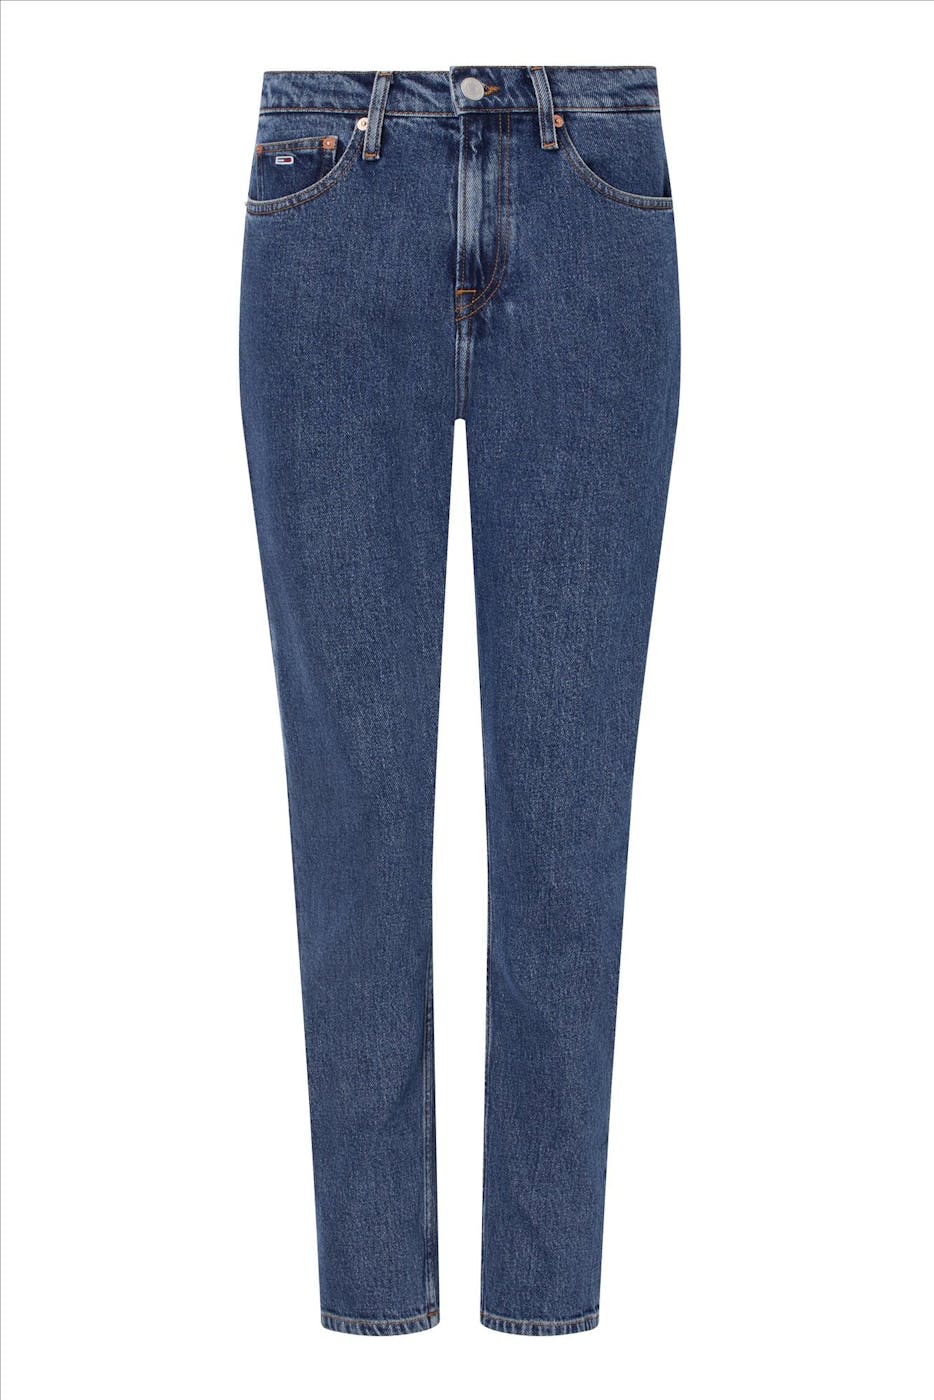 Tommy Jeans - Donkerblauwe Izzie Slim jeans